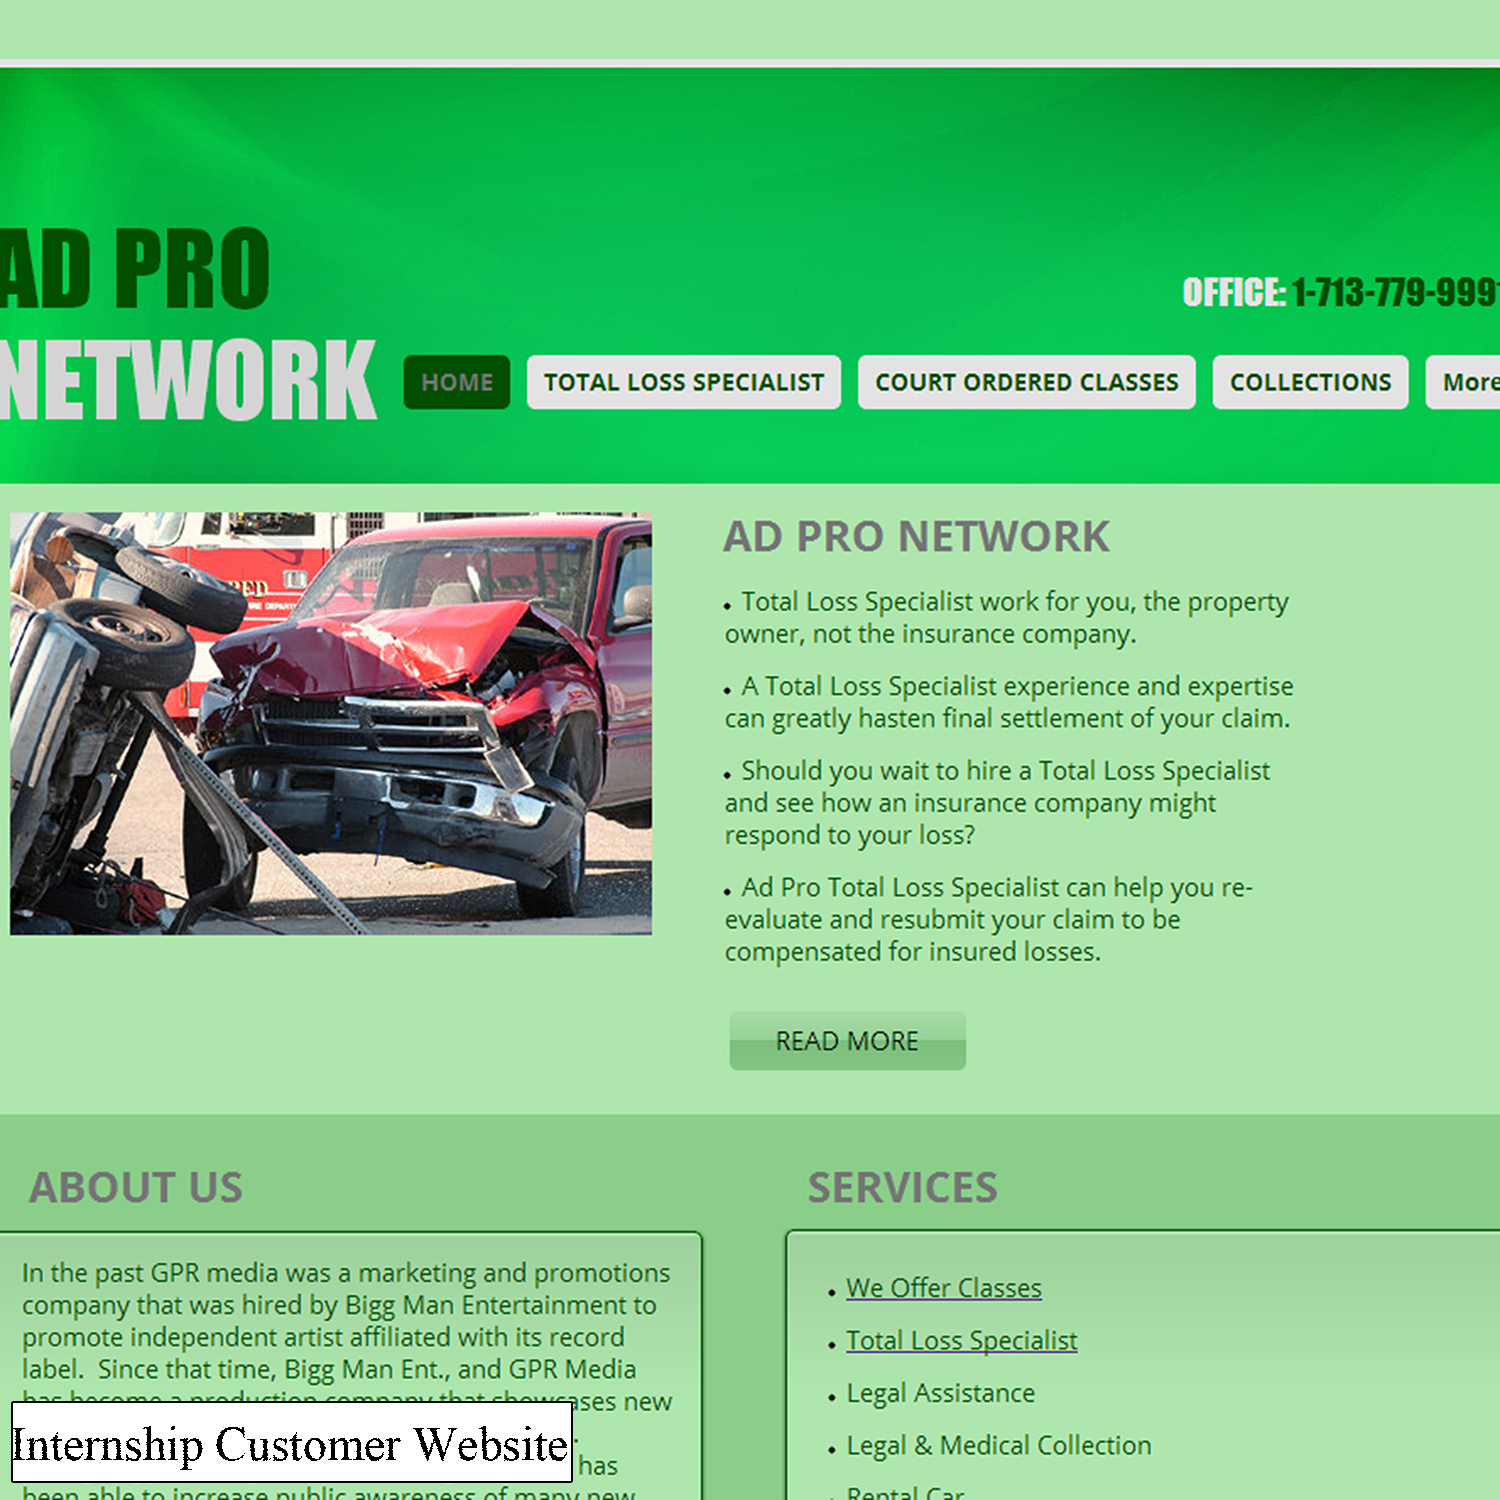 Image Screenshot of my internship Customer Website 1 of 3